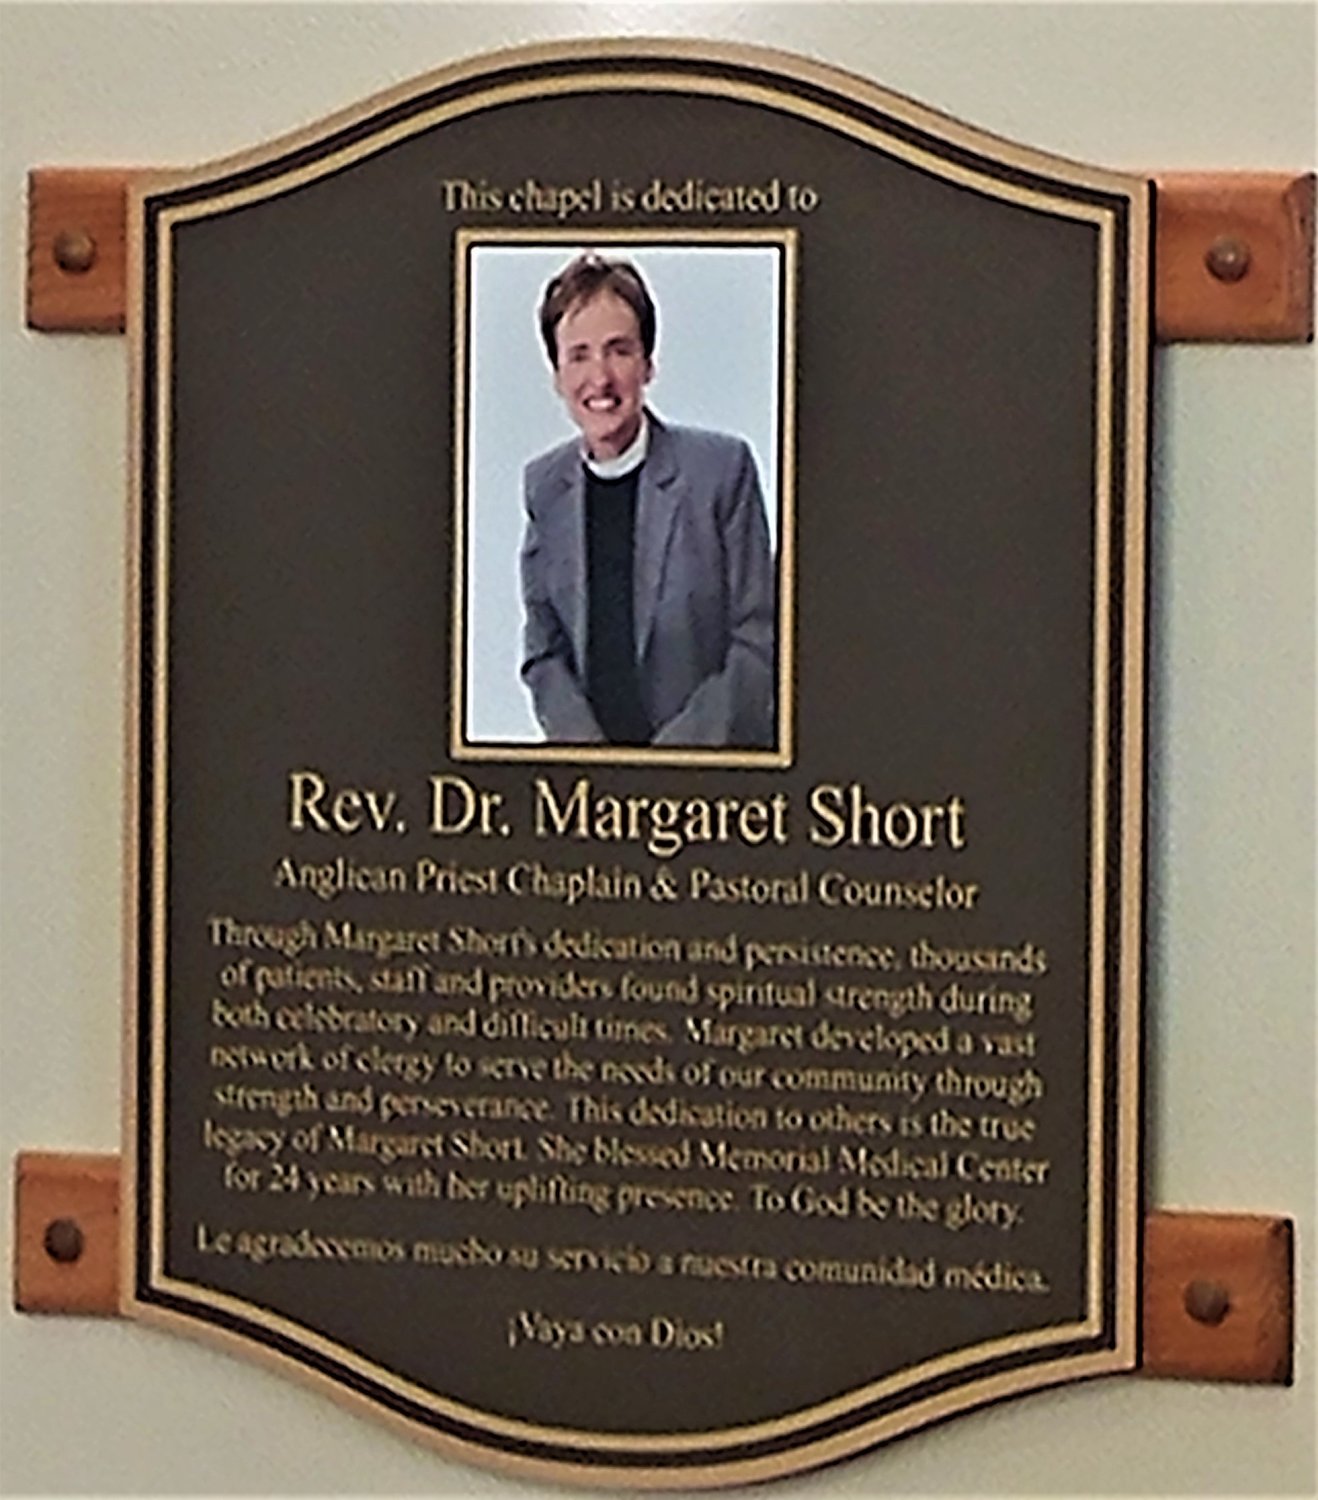 The plaque honoring the Rev. Dr. Margaret Short in Memorial Medical Center’s chapel.